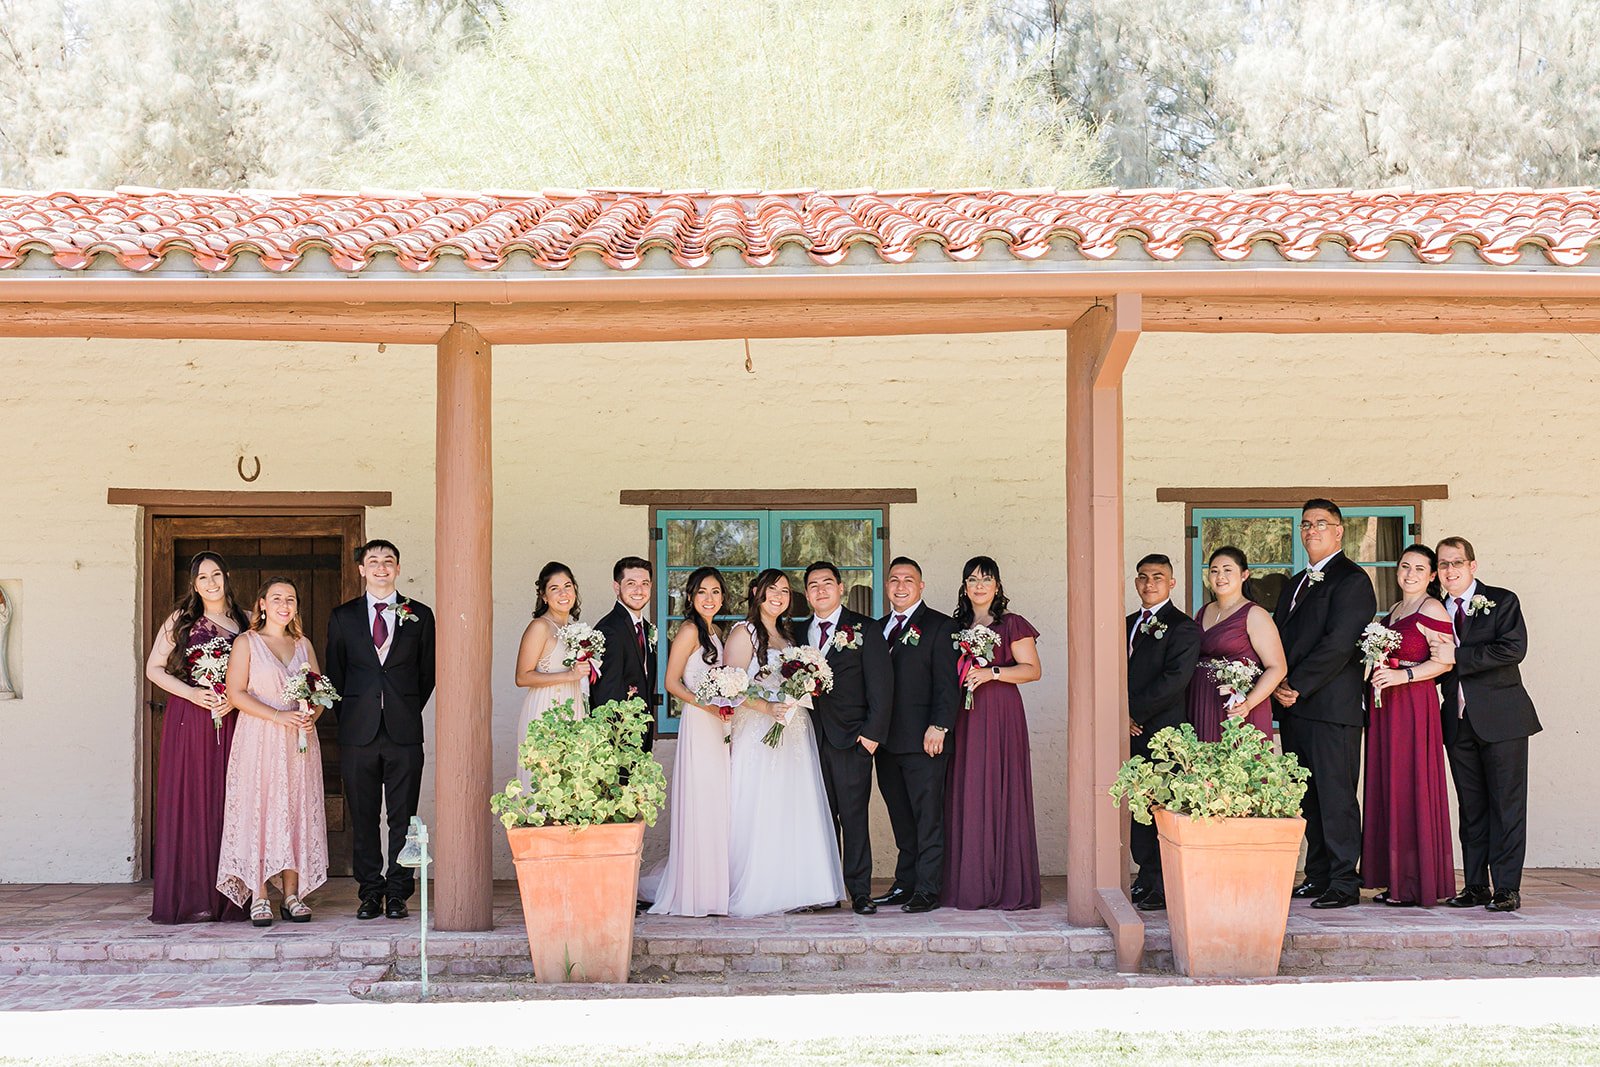 Wedding party portraits at Tesoro Adobe Historic Park in Santa Clarita